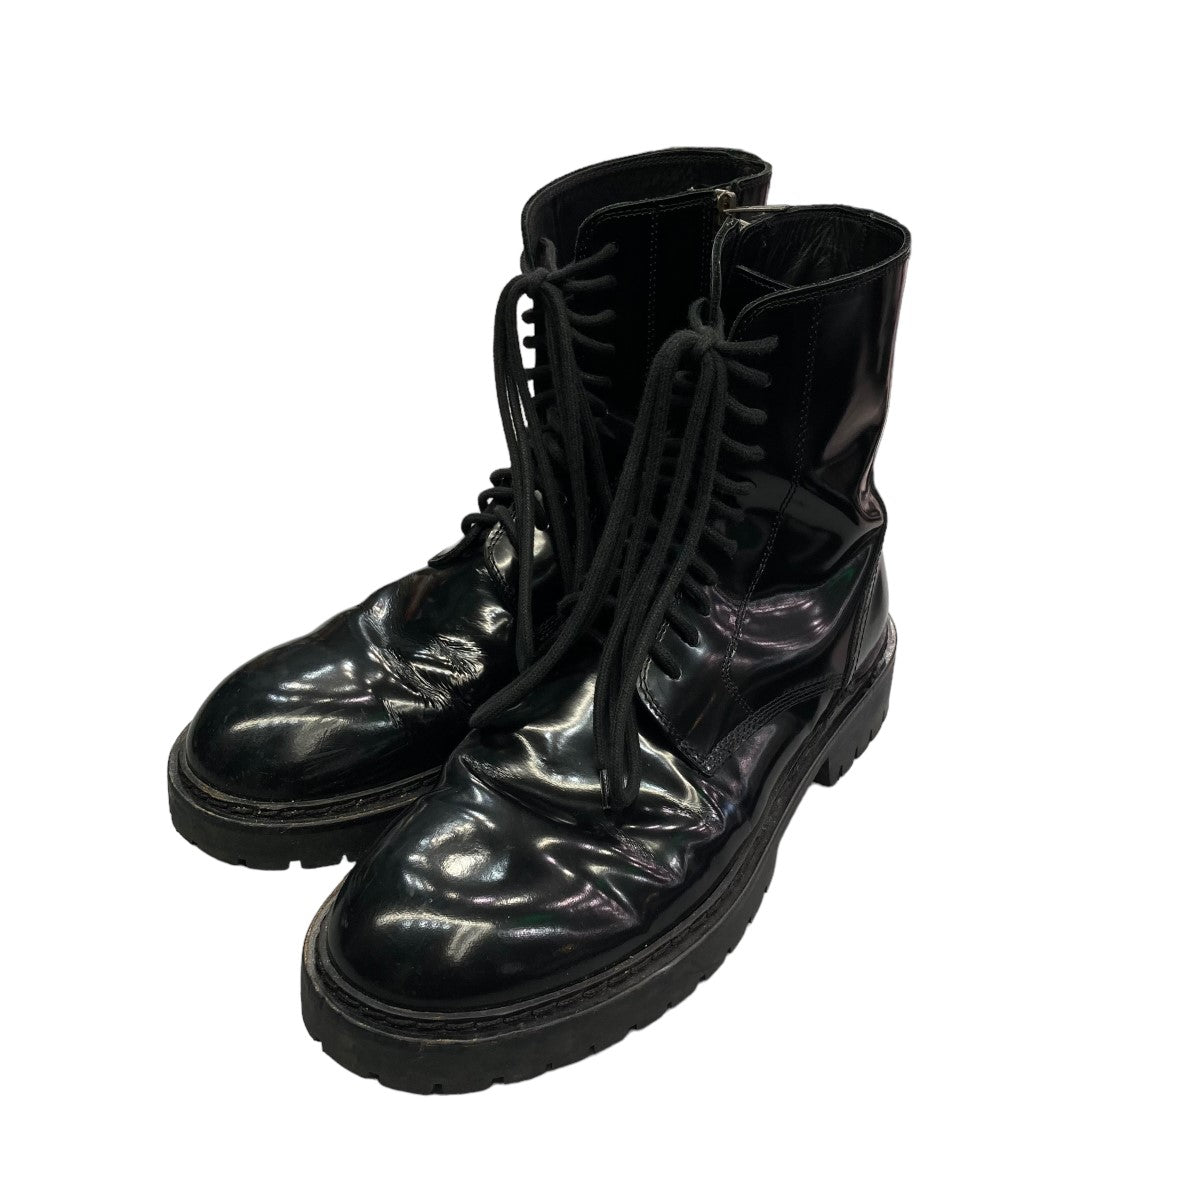 MADEINITALY名作 本人期2013AW ANN DEMEULEMEESTER ブーツ - 靴